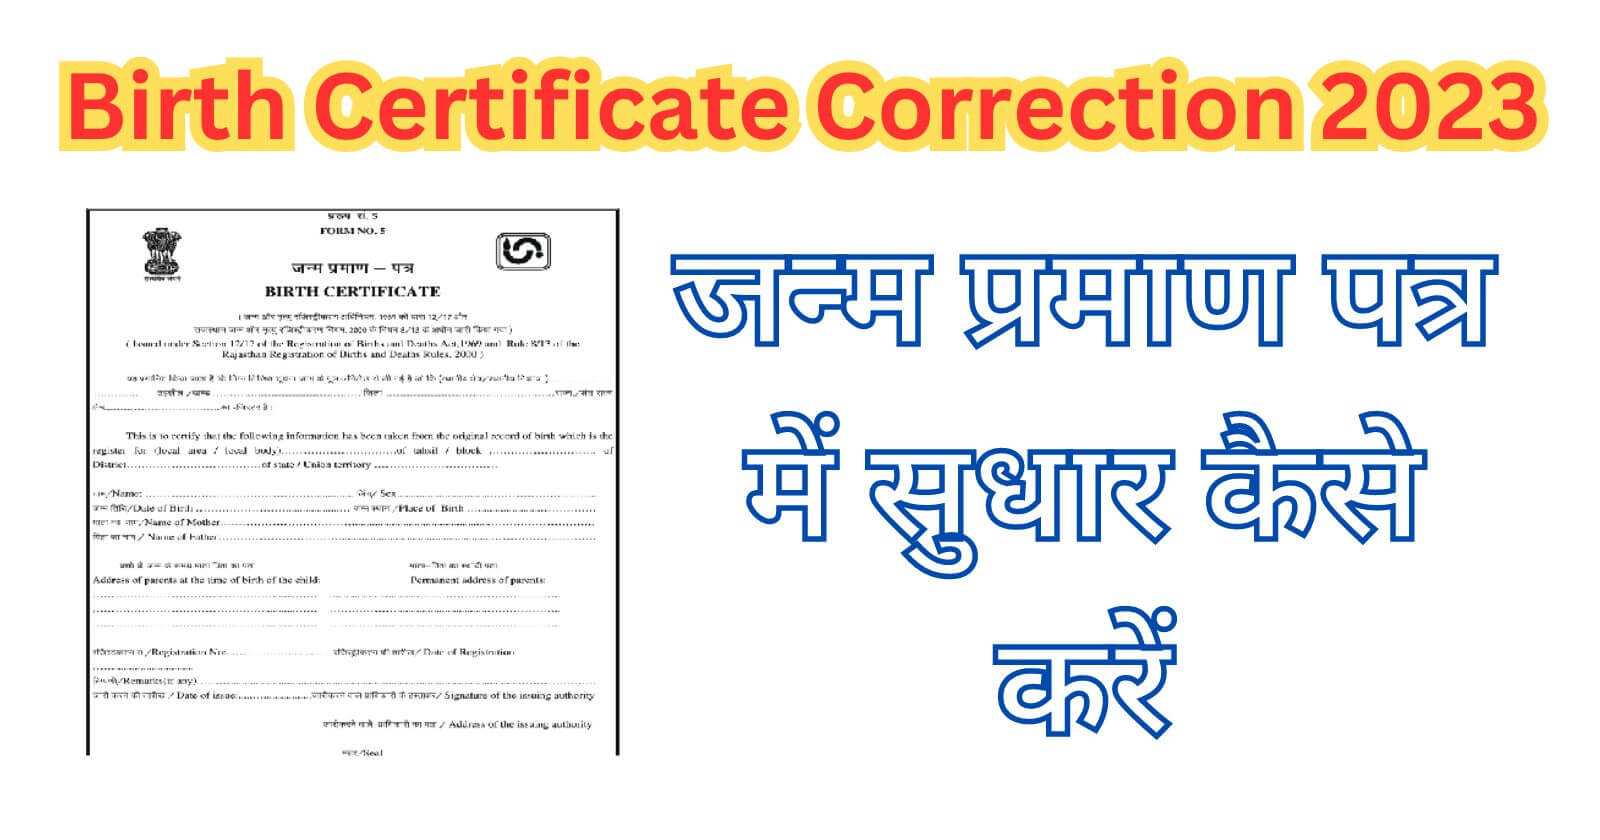 Birth Certificate Correction 2023